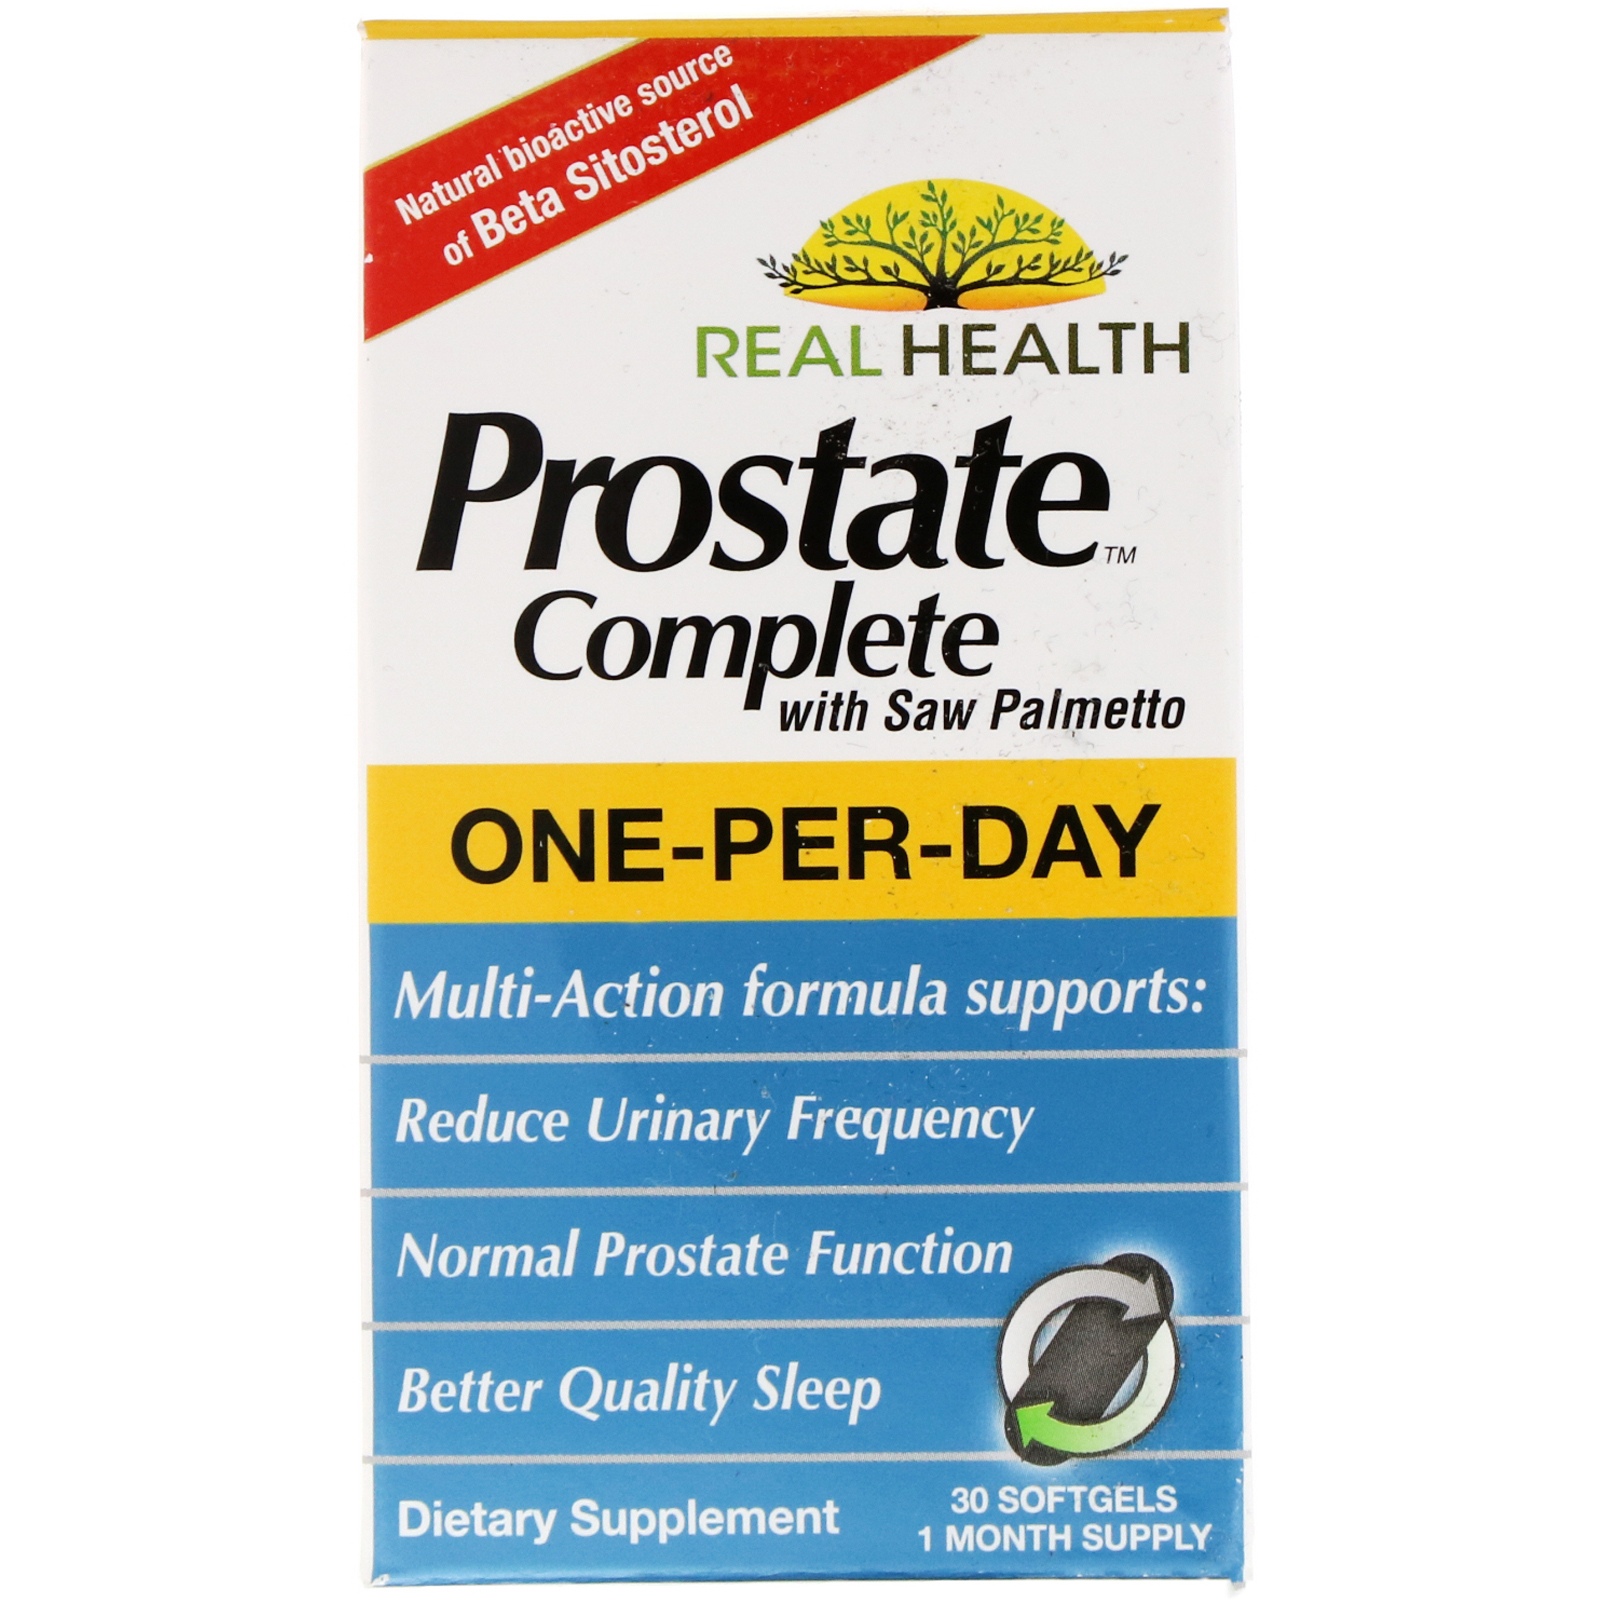 prostate health iherb